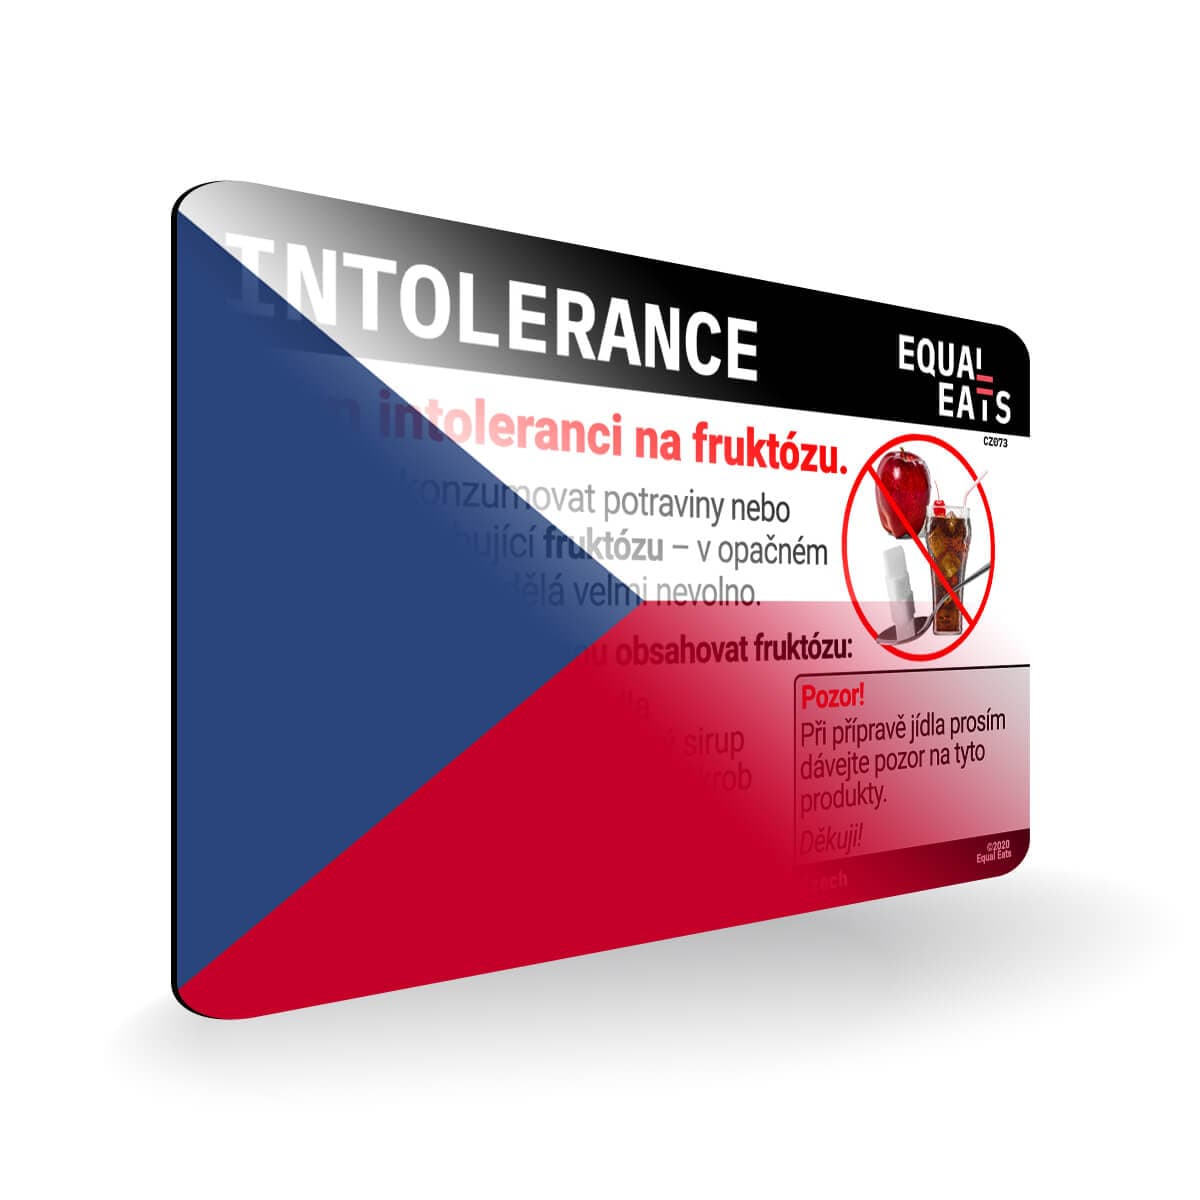 Fructose Intolerance in Czech. Fructose Intolerant Card for Czech Republic